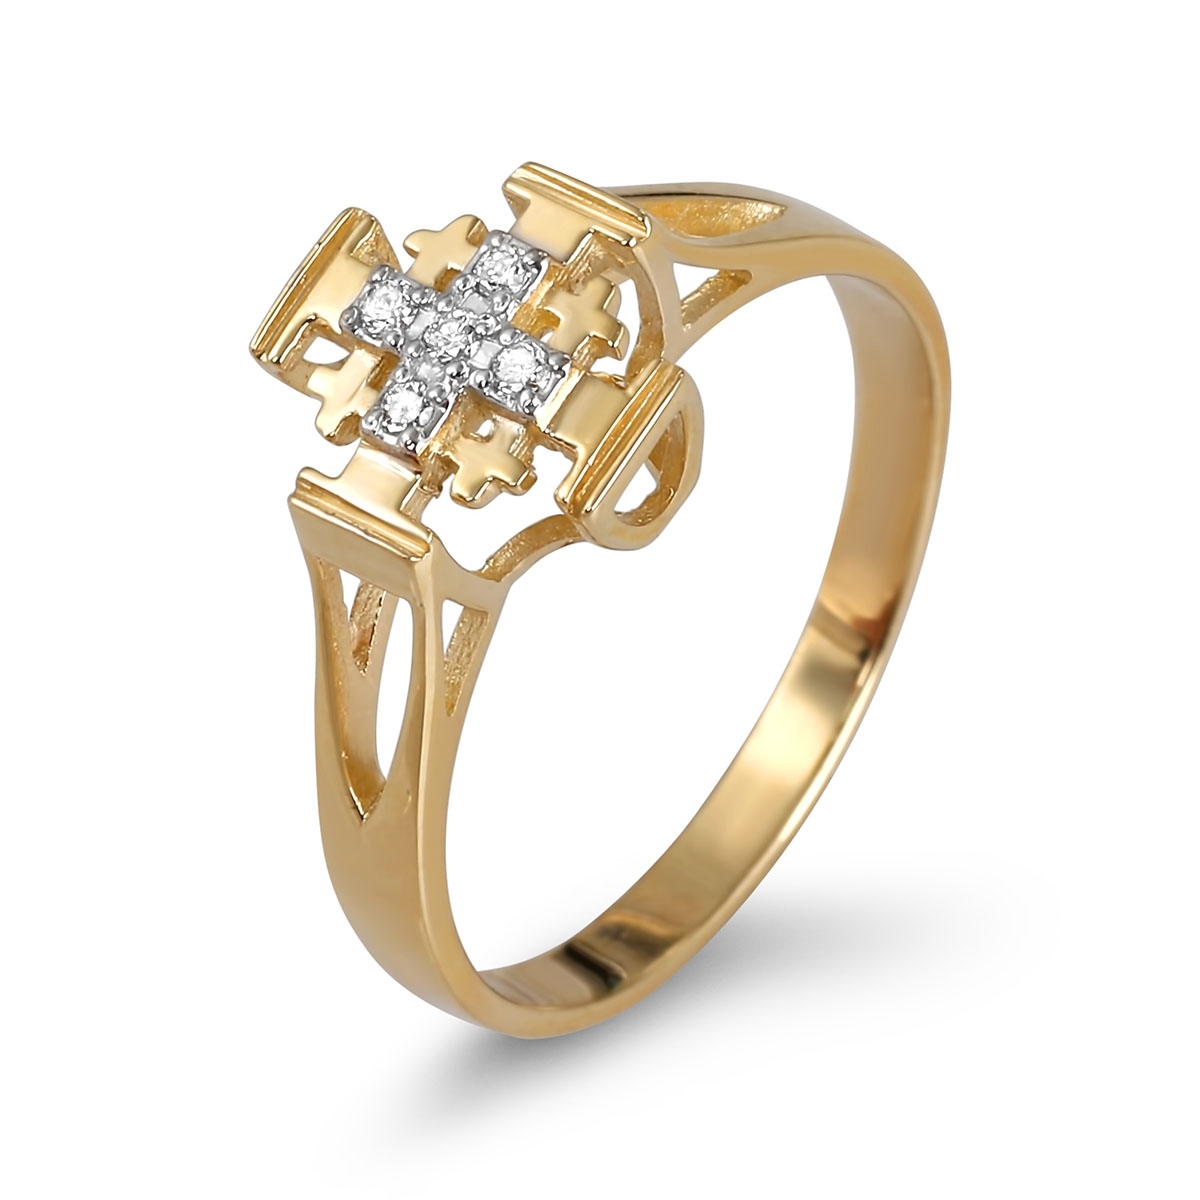 Anbinder 14K Gold Women’s Openwork Jerusalem Cross Ring with Diamond Accents - 1